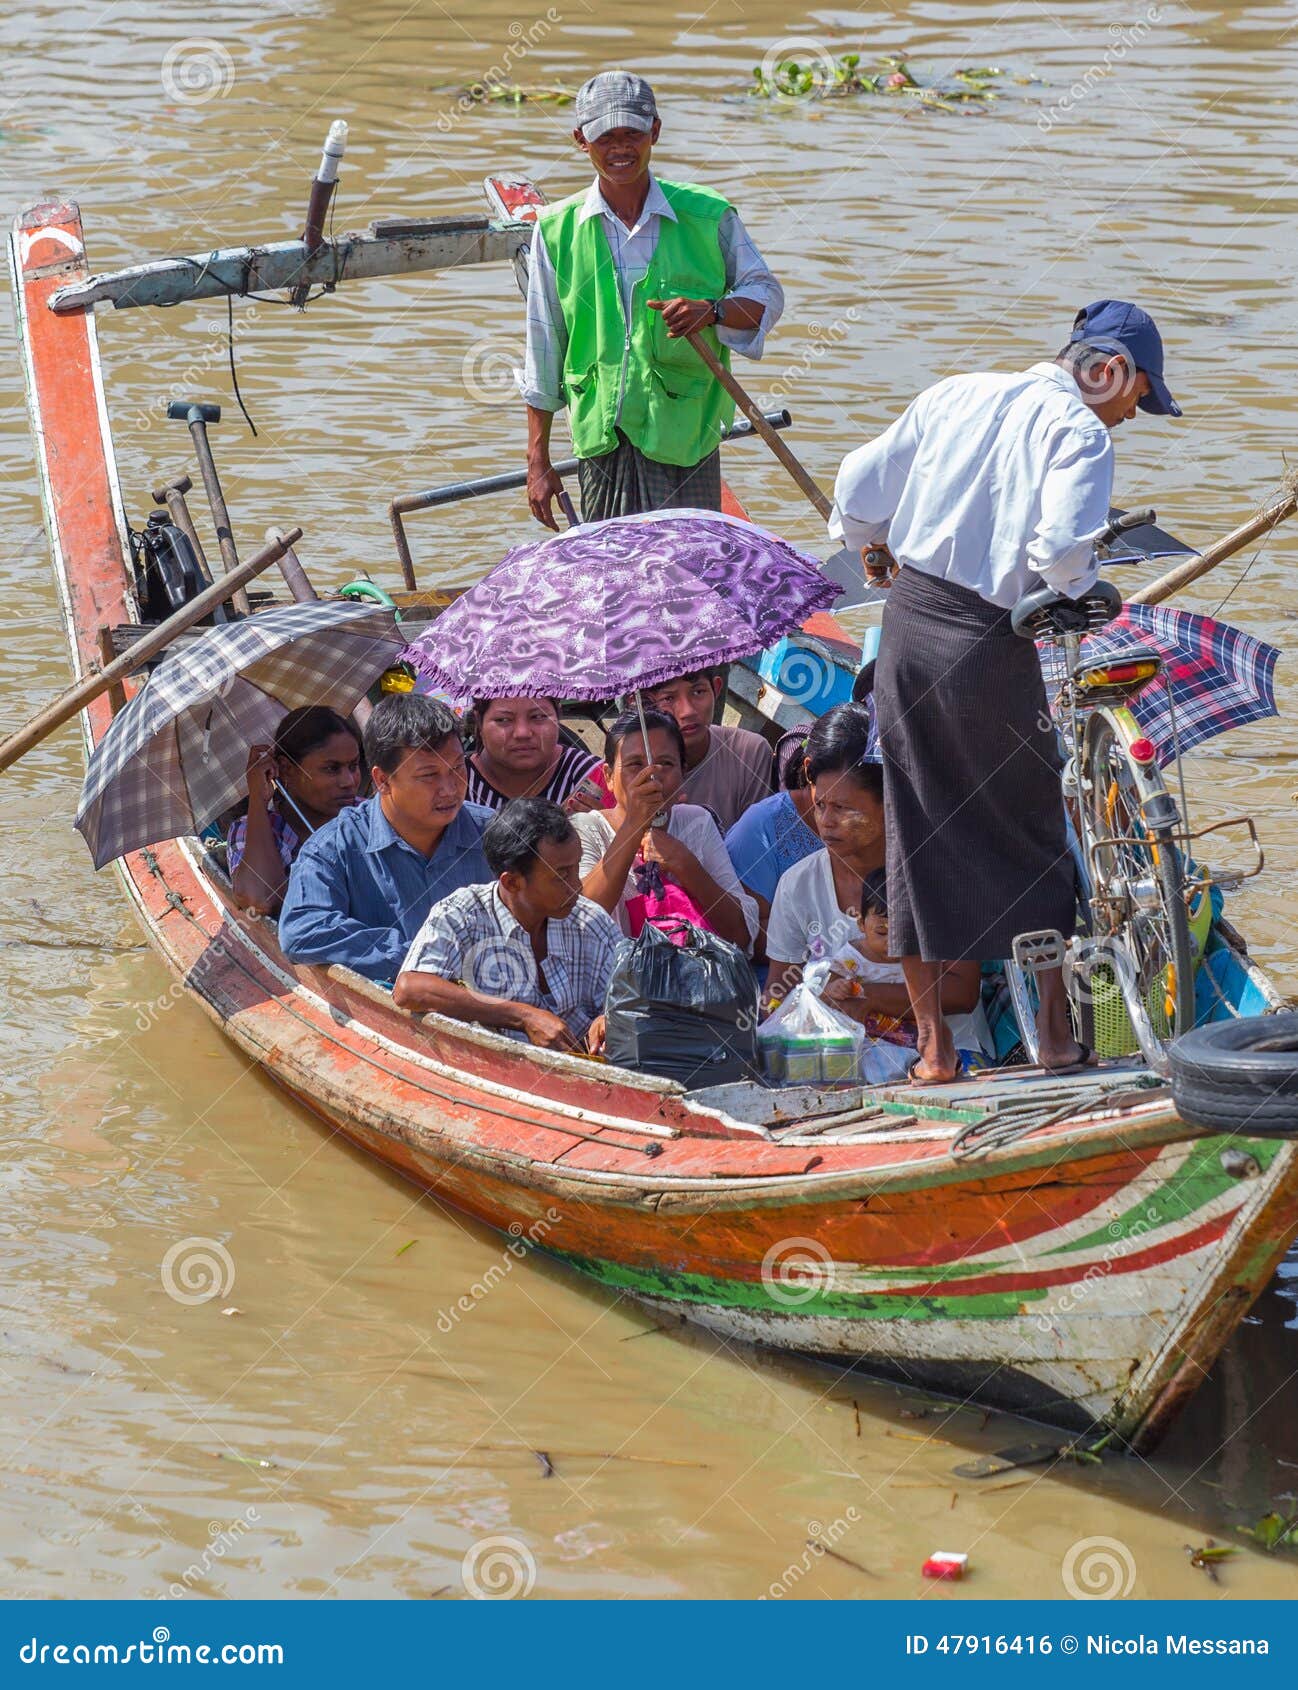 People take the boat to cross the Yangon River, Myanmar. YANGON, MYANMAR - NOVEMBER 22, 2014: several unidentified people take the boat to cross the Yangon River (also known as Rangoon River or Hlaing River)